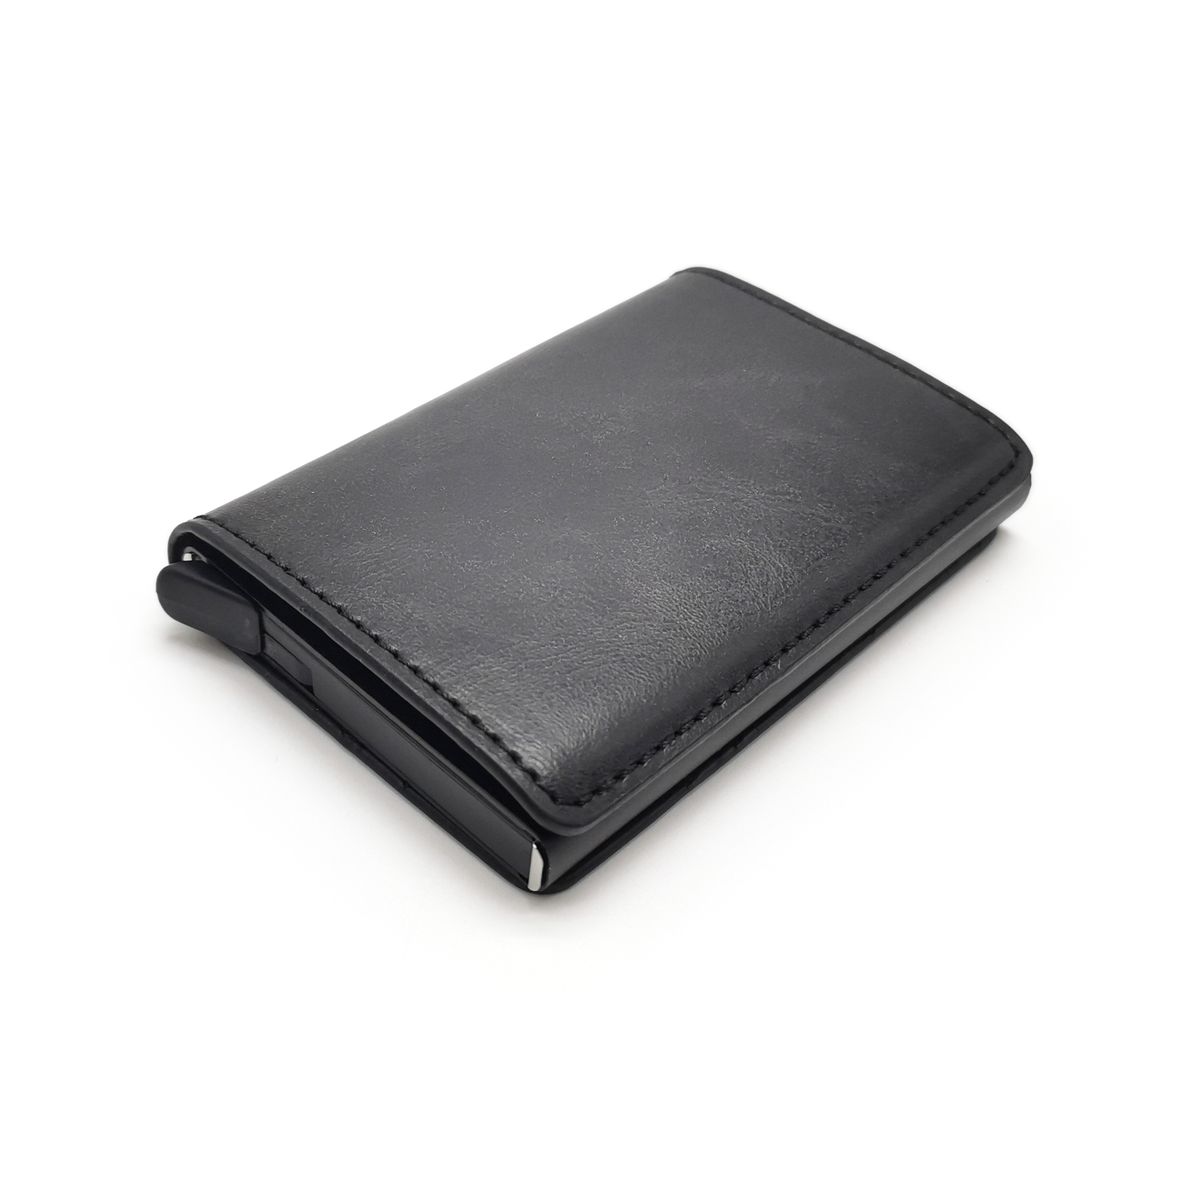 Soft Leather Pop-up Card Holder/Wallet Case with RFID Blocking | Shop ...